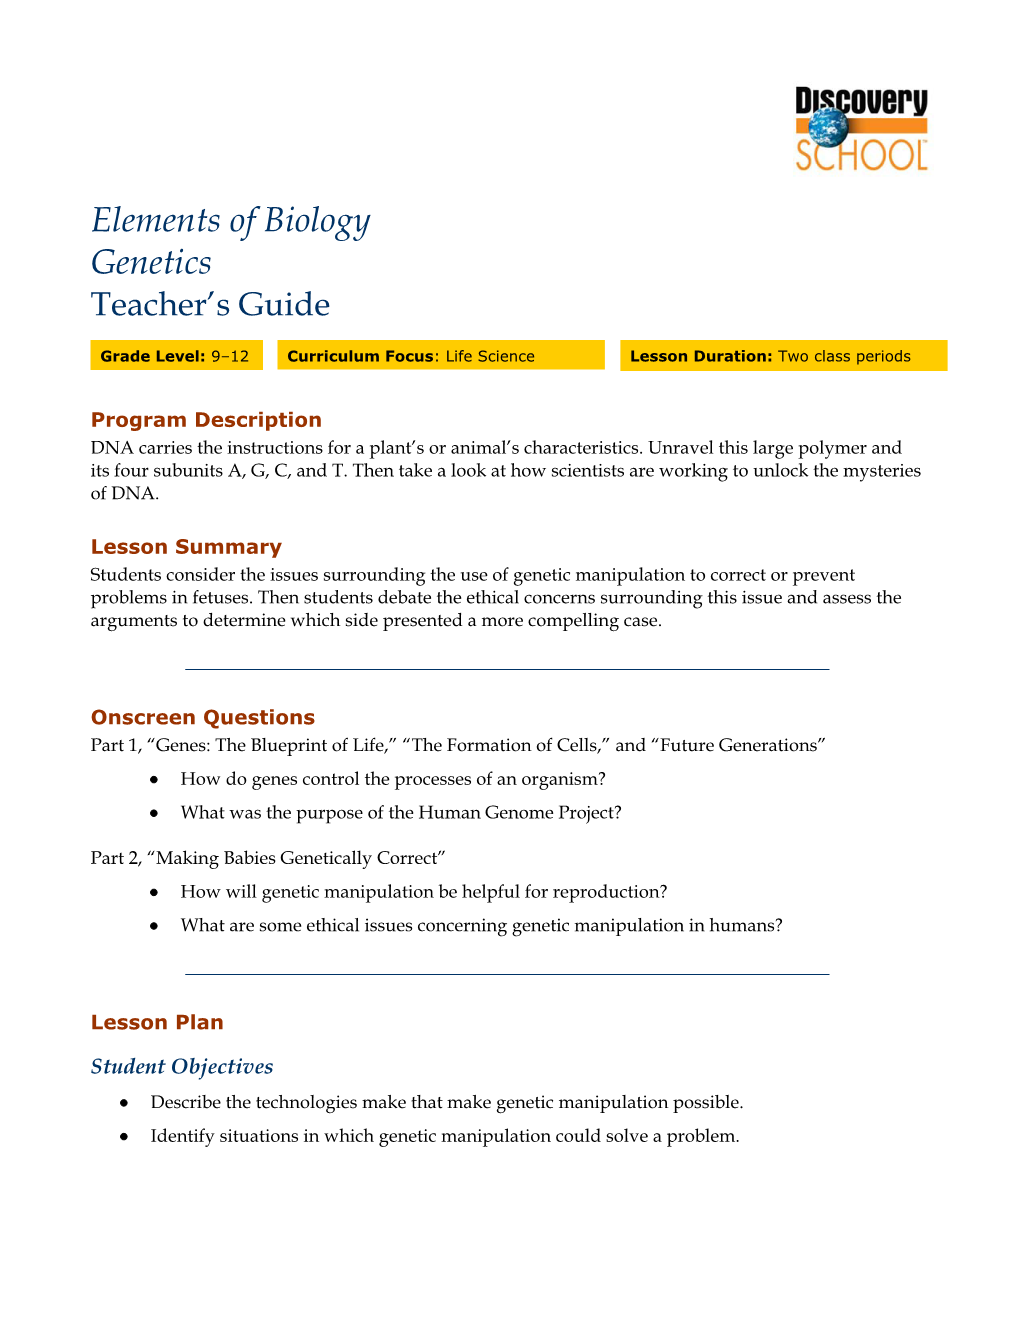 Elements of Biology Genetics Teacher’S Guide 2